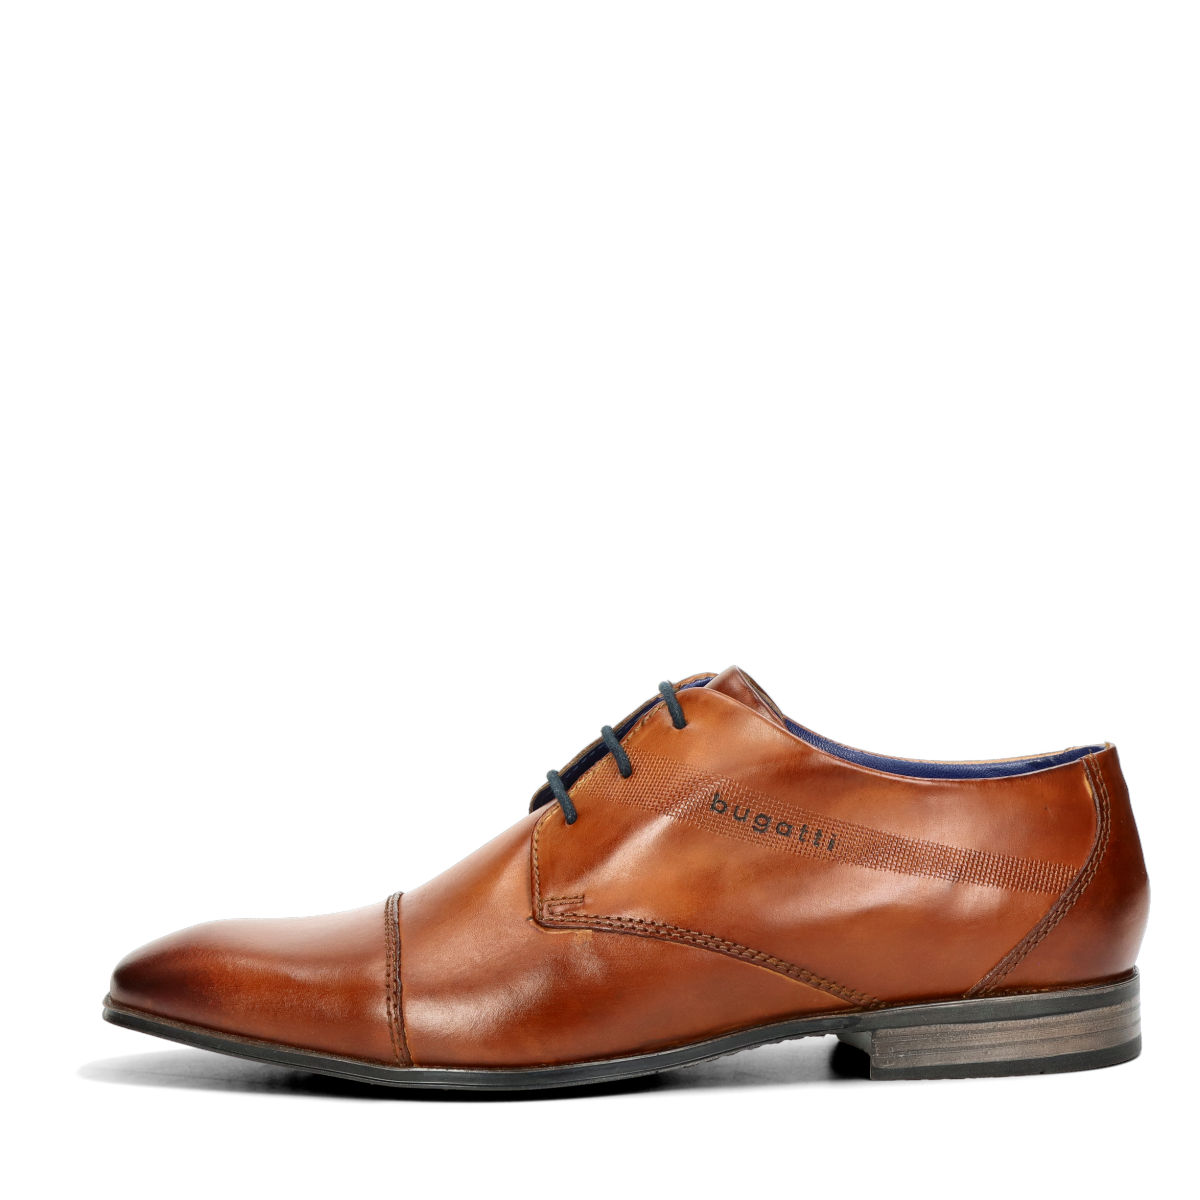 Bugatti men\'s leather shoes - cognac brown formal